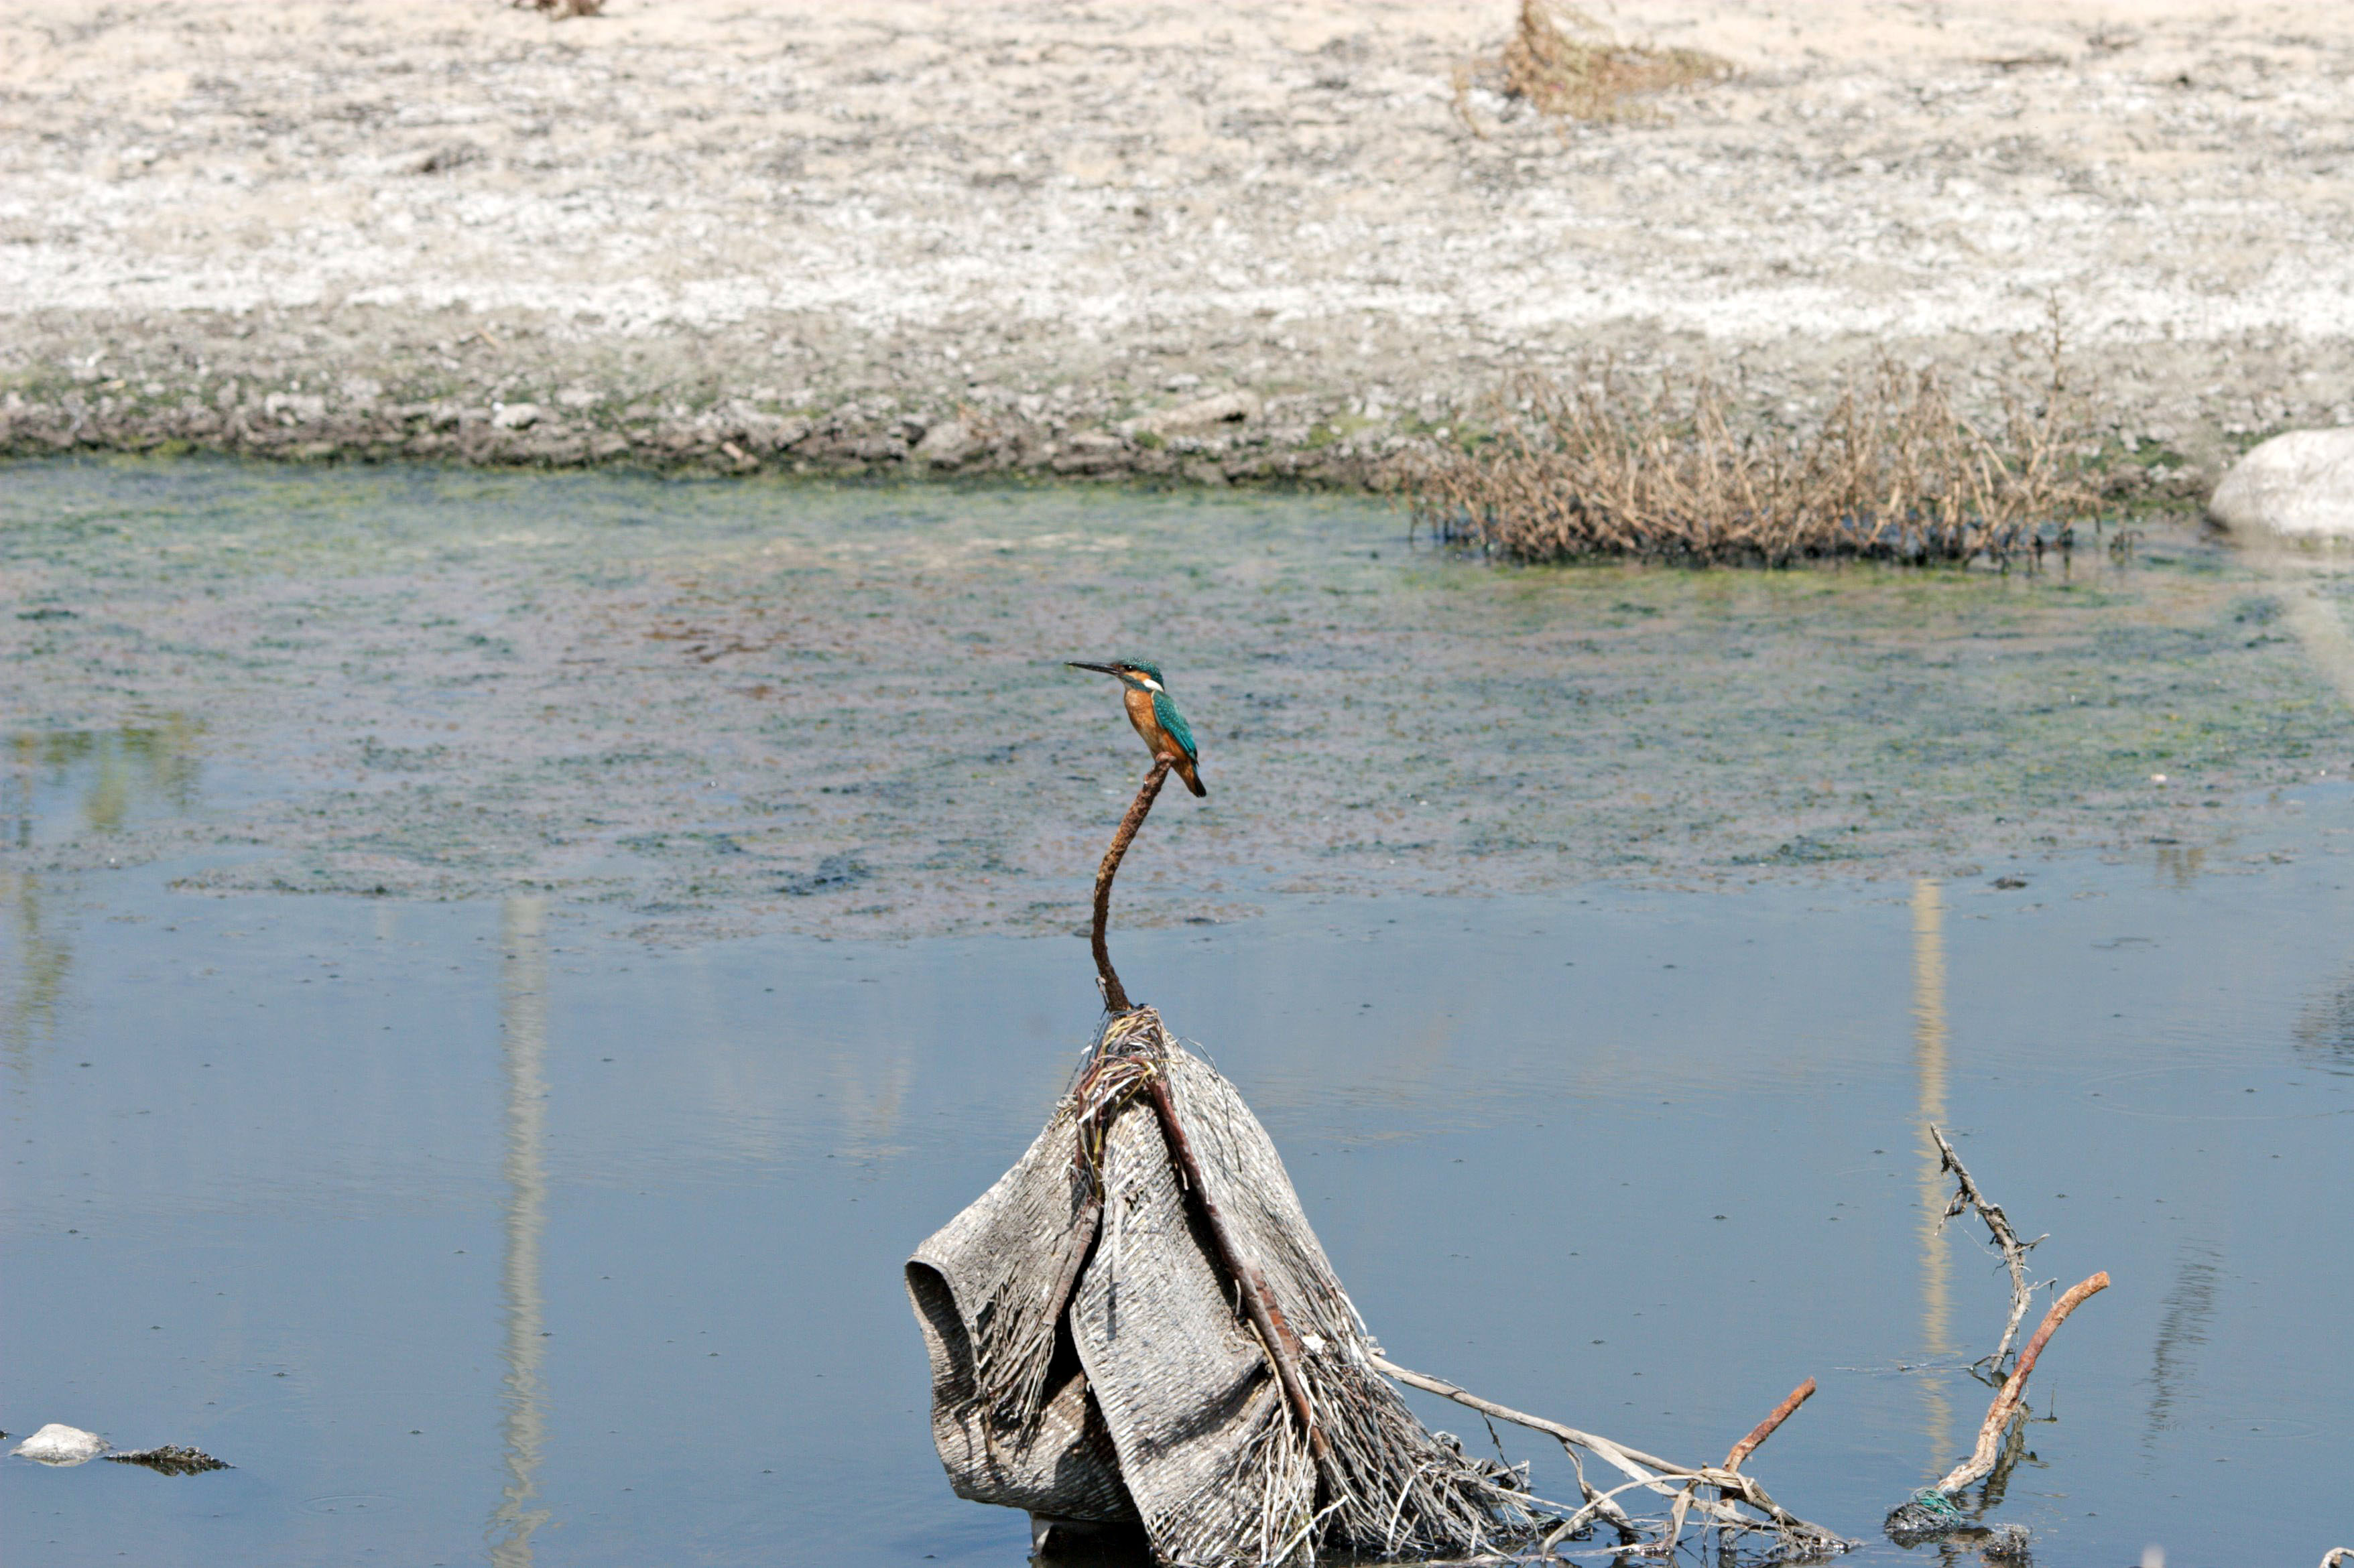 Kingfisher amidst sewage